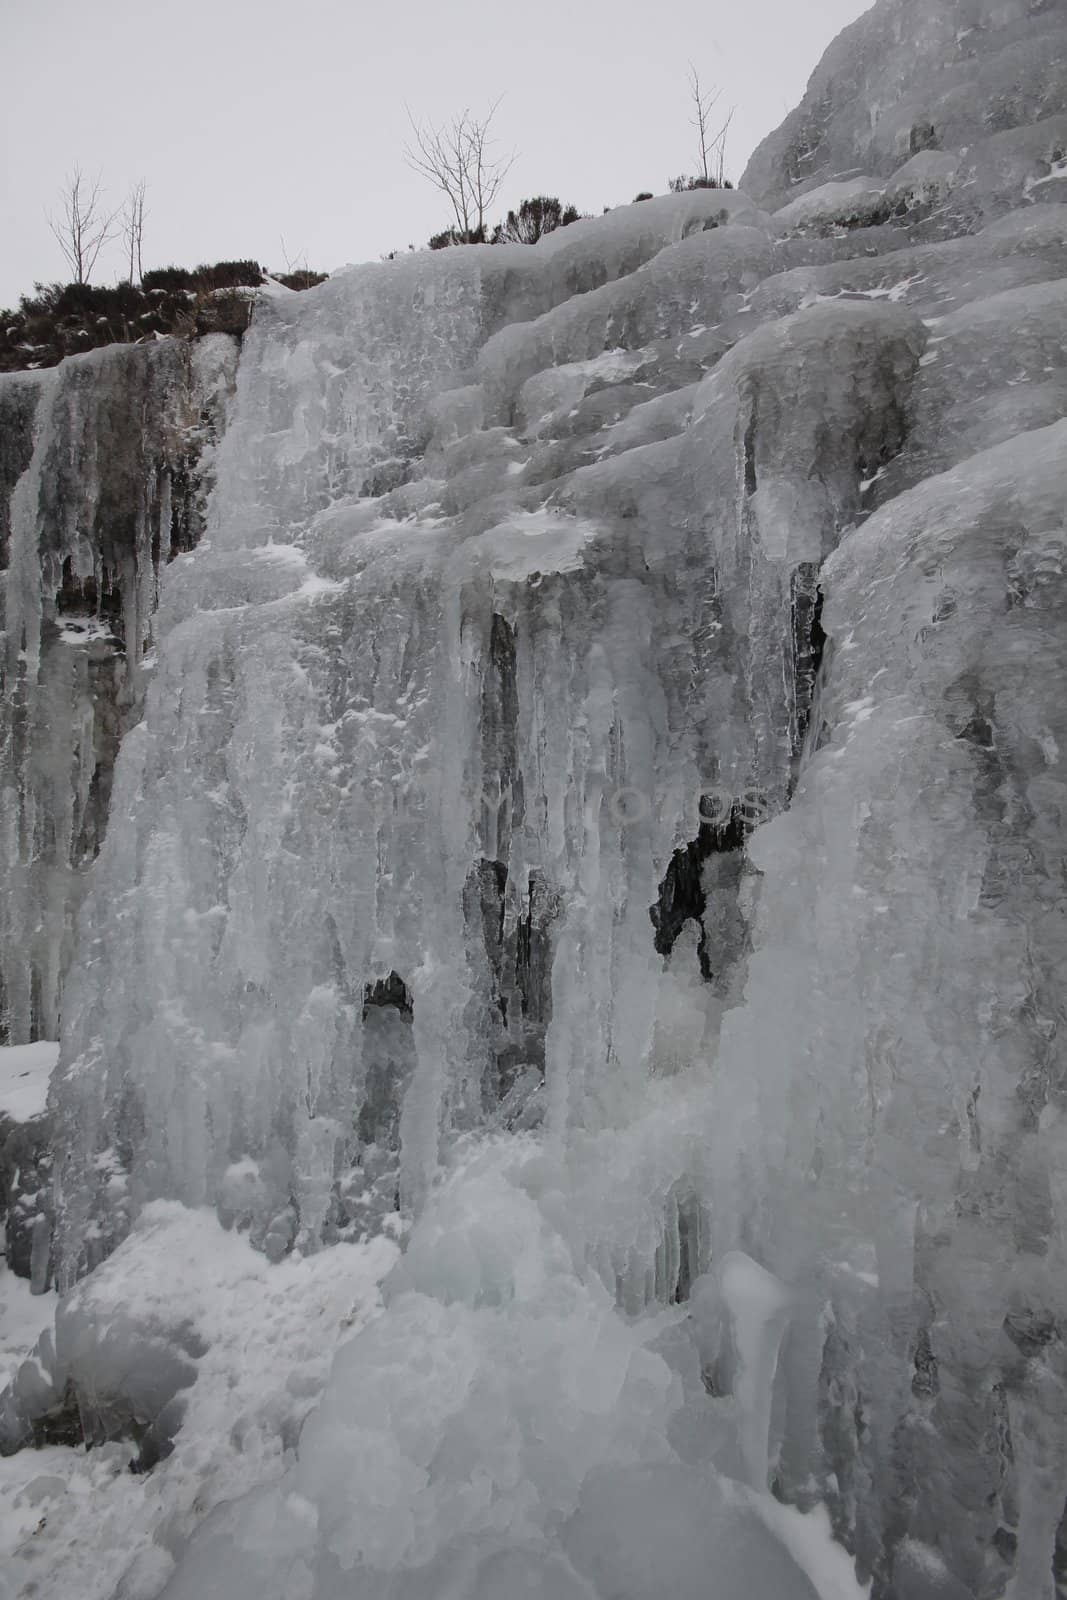 Snowey frozen waterfall in Wales at Christmas